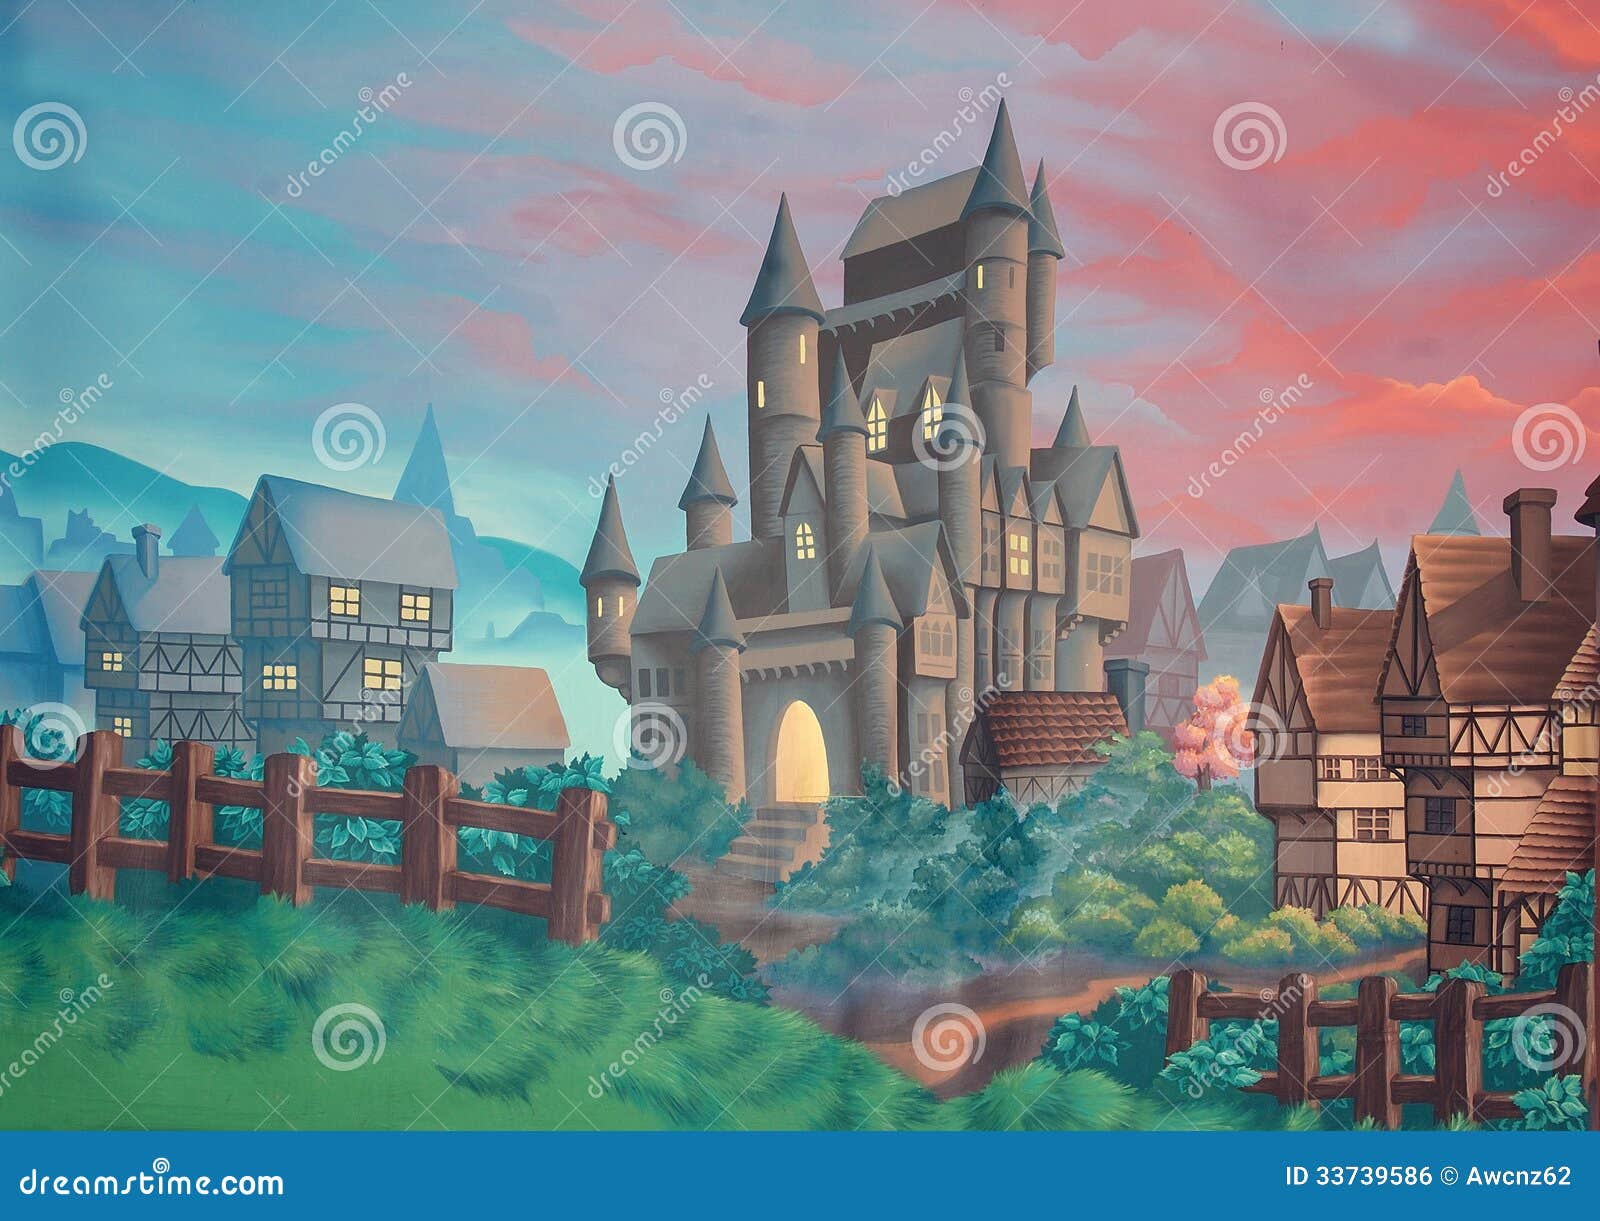 castle backdrop